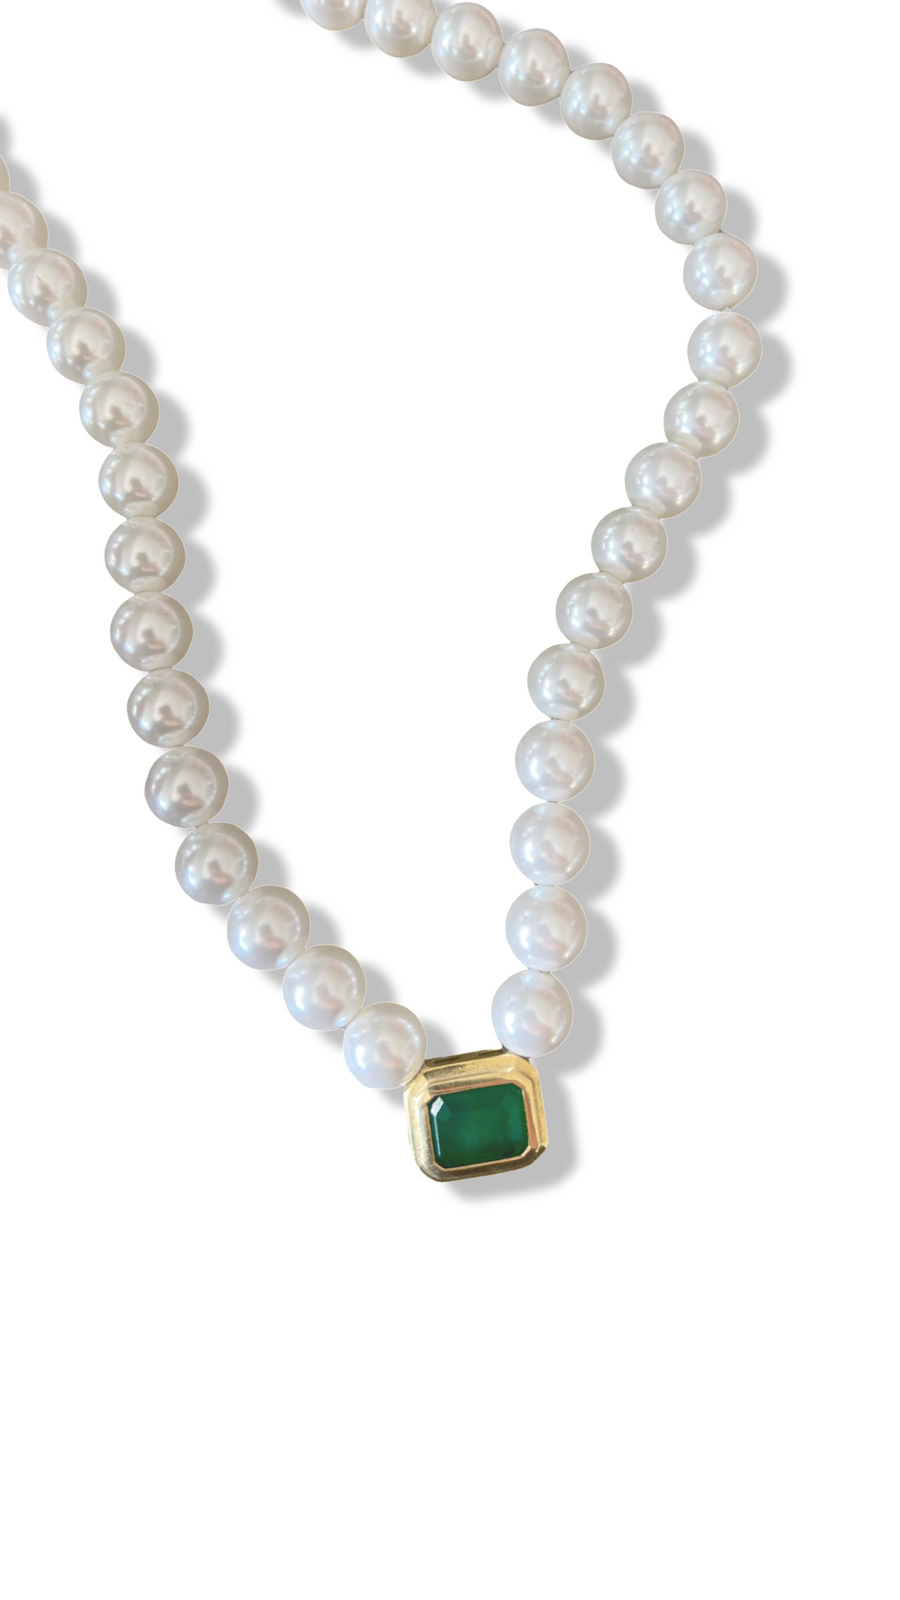 Yasmin pearl necklace - round